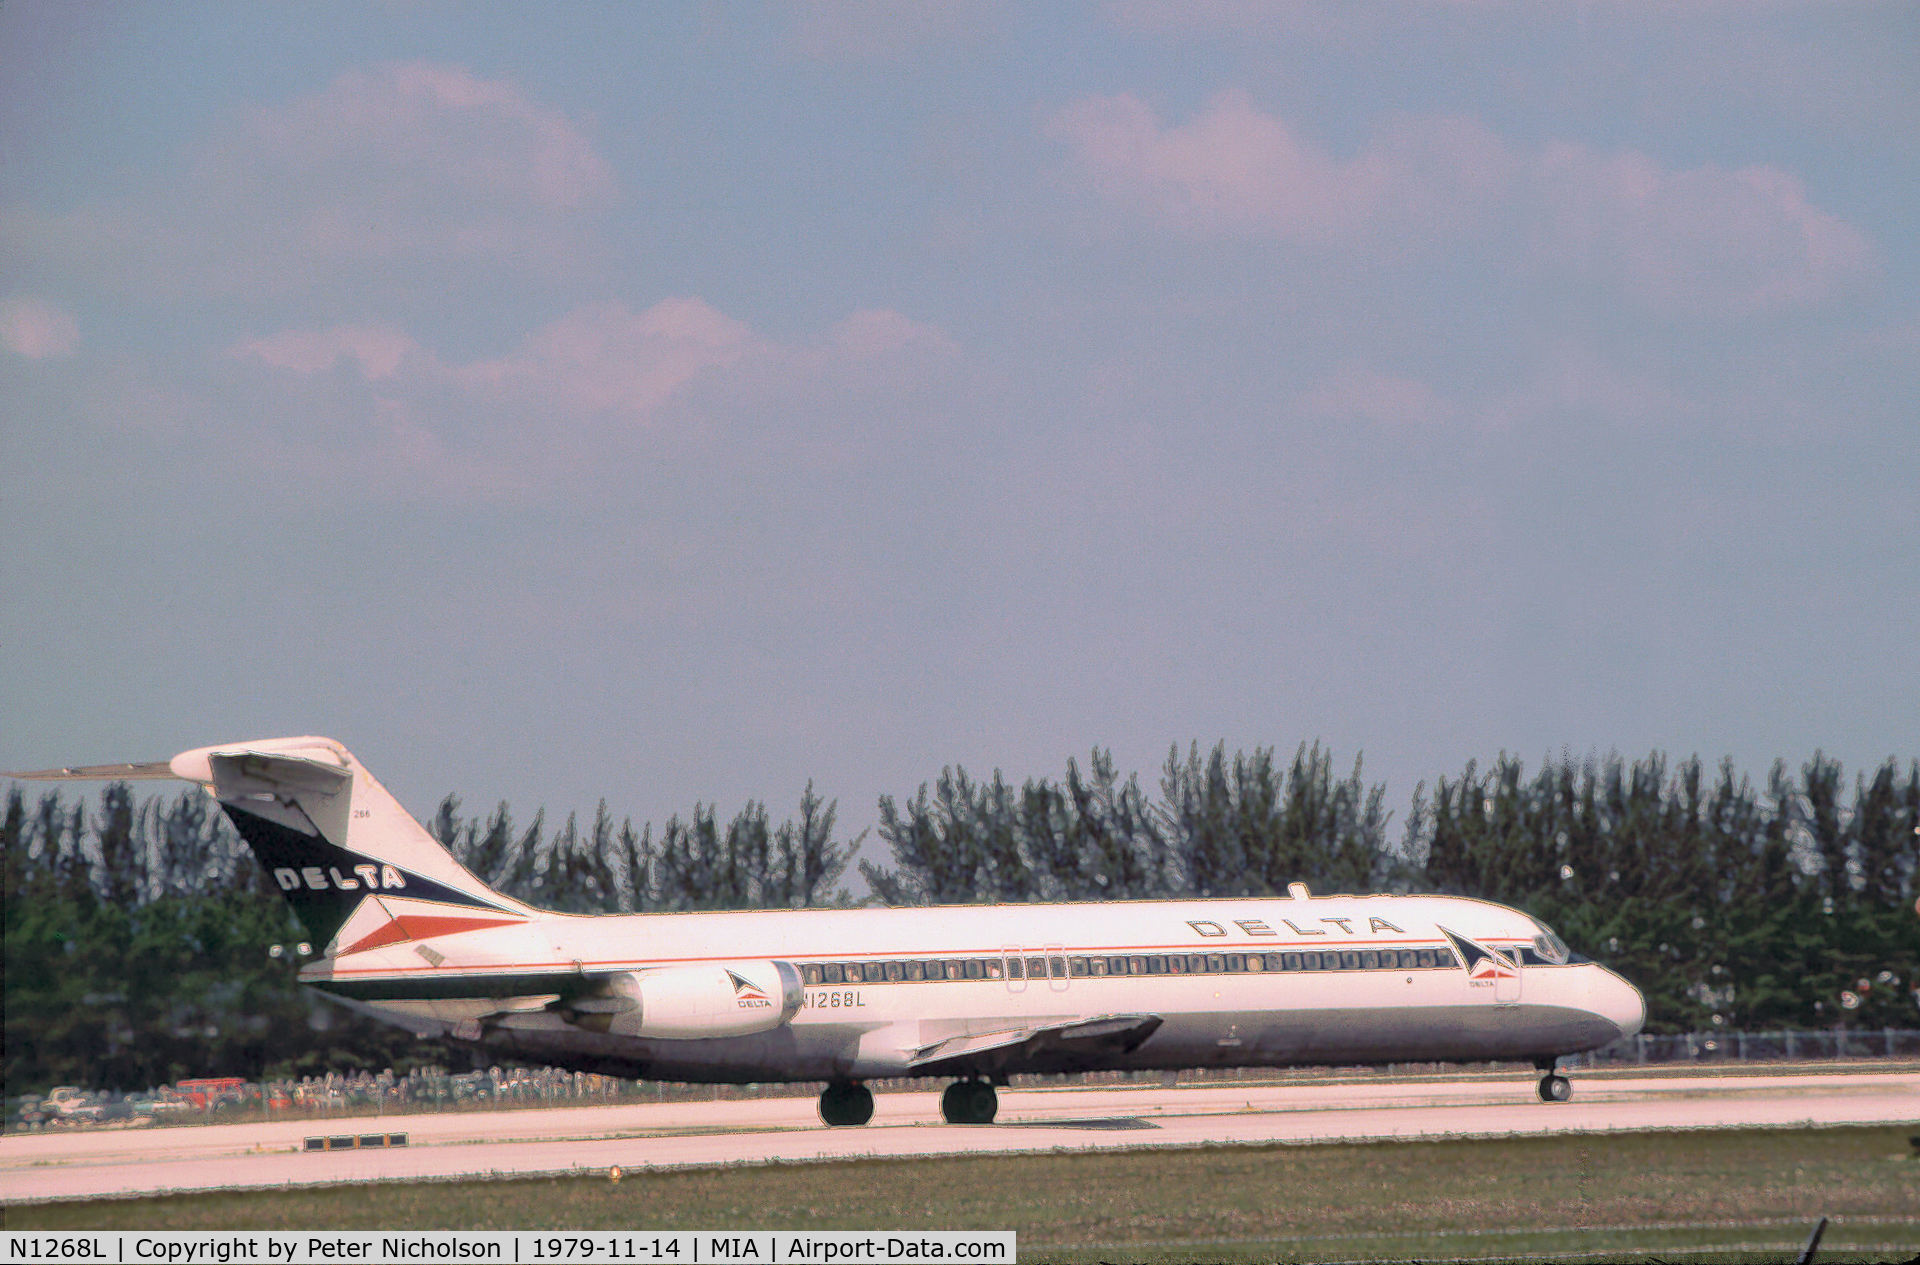 N1268L, 1968 Douglas DC-9-32 C/N 47284, DC-9-32 of Delta Air Lines preparing for take-off at Miami International in November 1979.